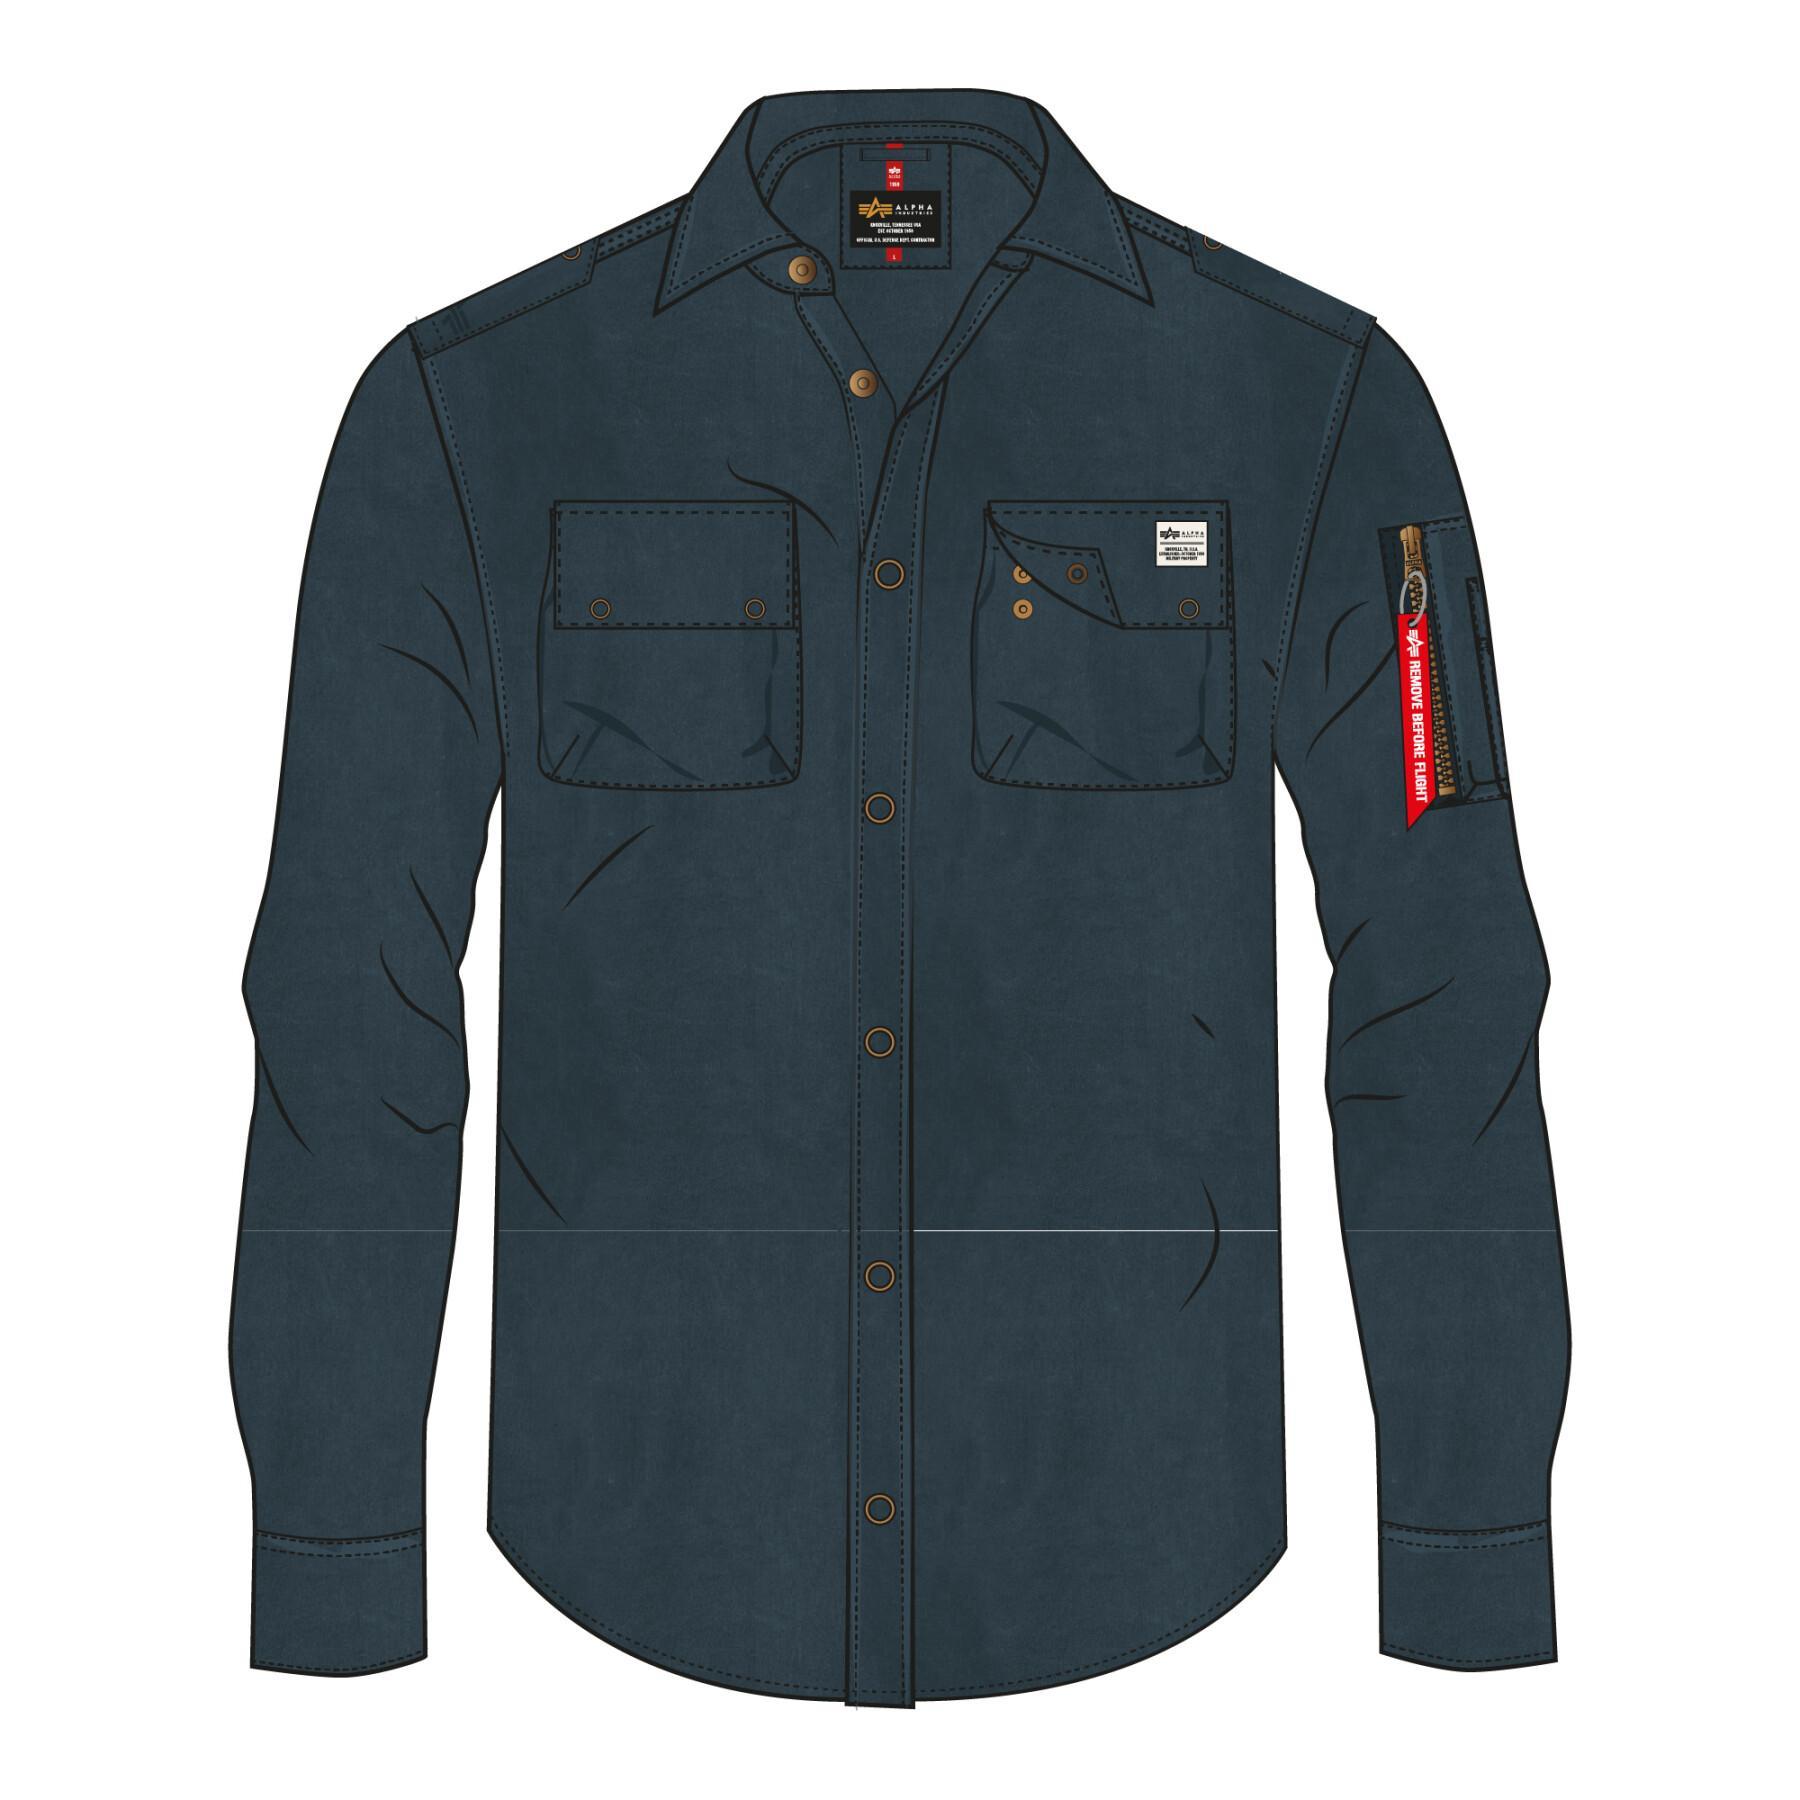 - Urban Overshirt Clothing Jackets - - Industries Military Men Alpha